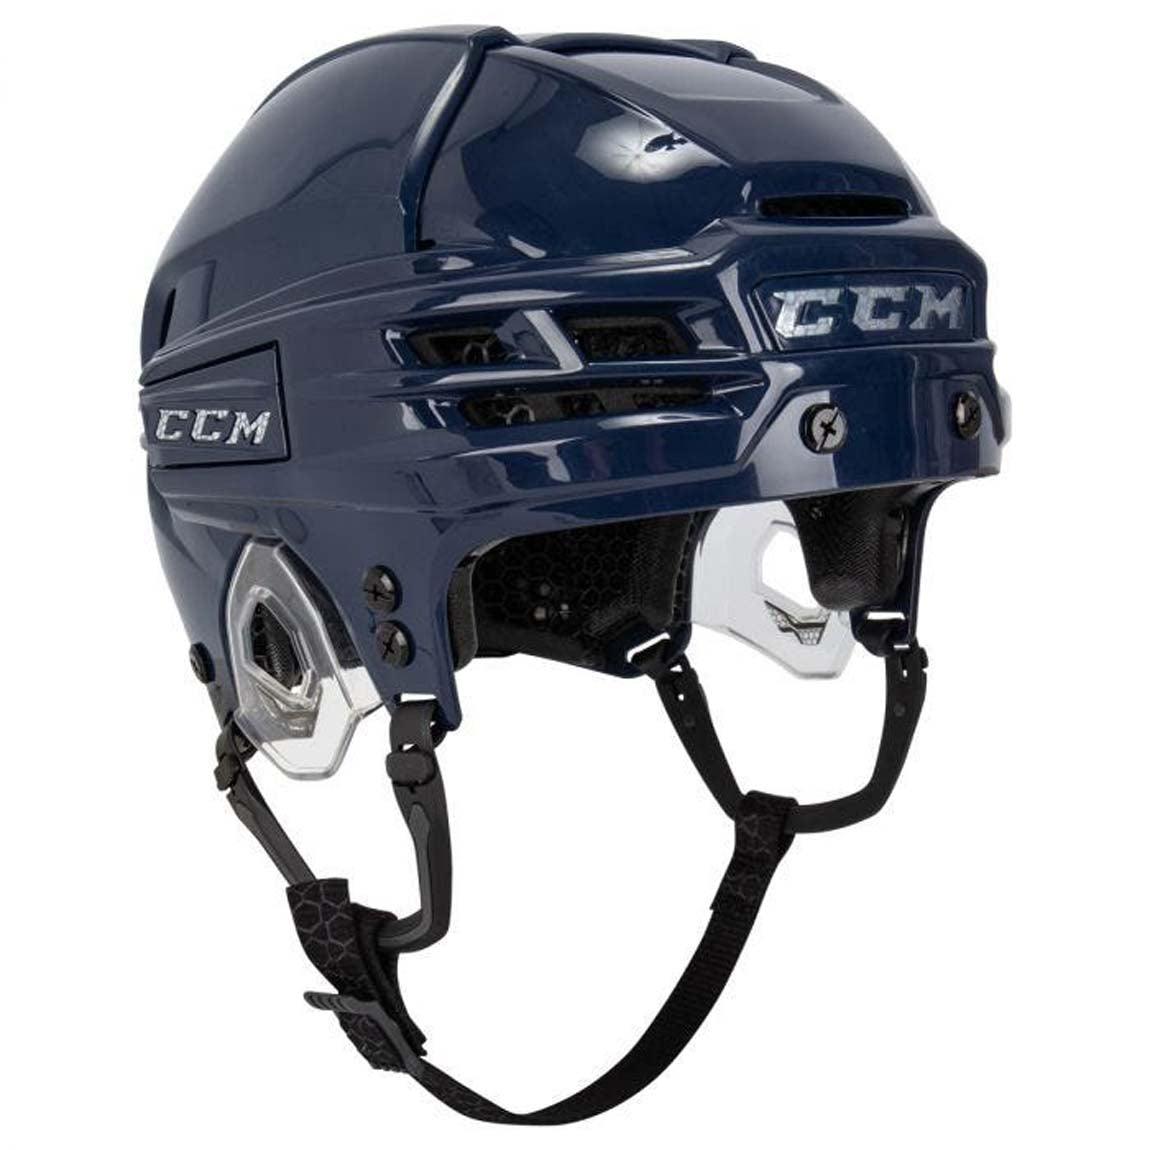 Super Tacks X Hockey Helmet - Senior - Sports Excellence